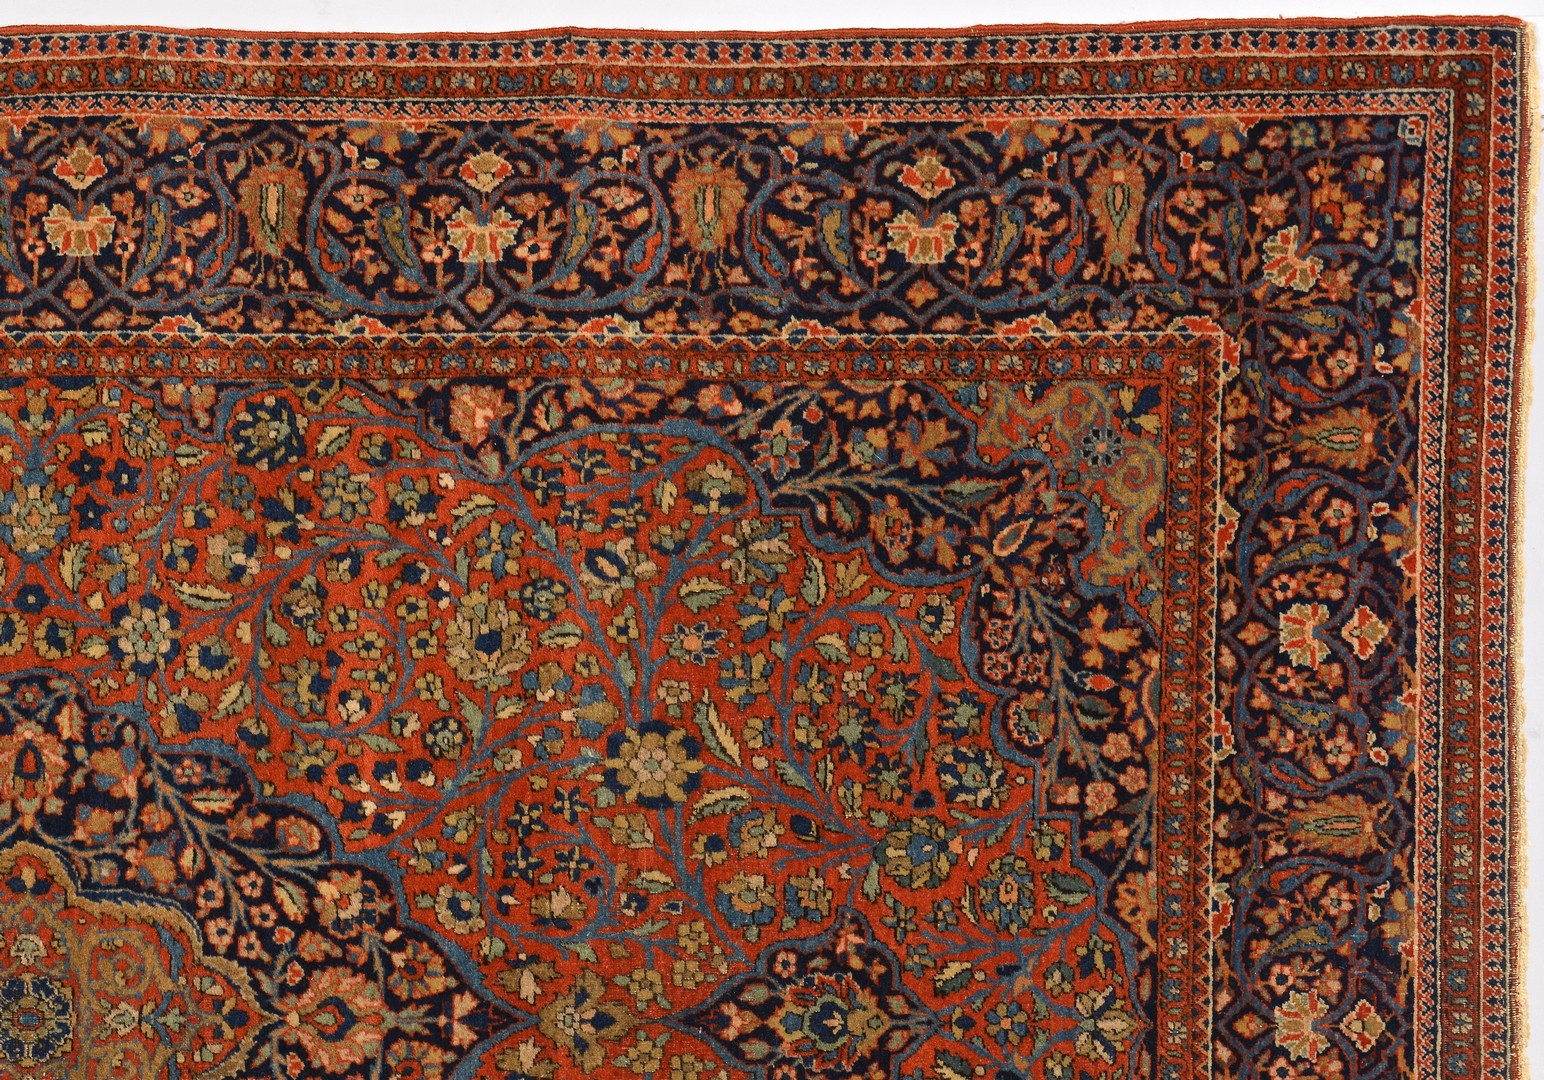 Lot 249: Antique Persian Kashan area rug